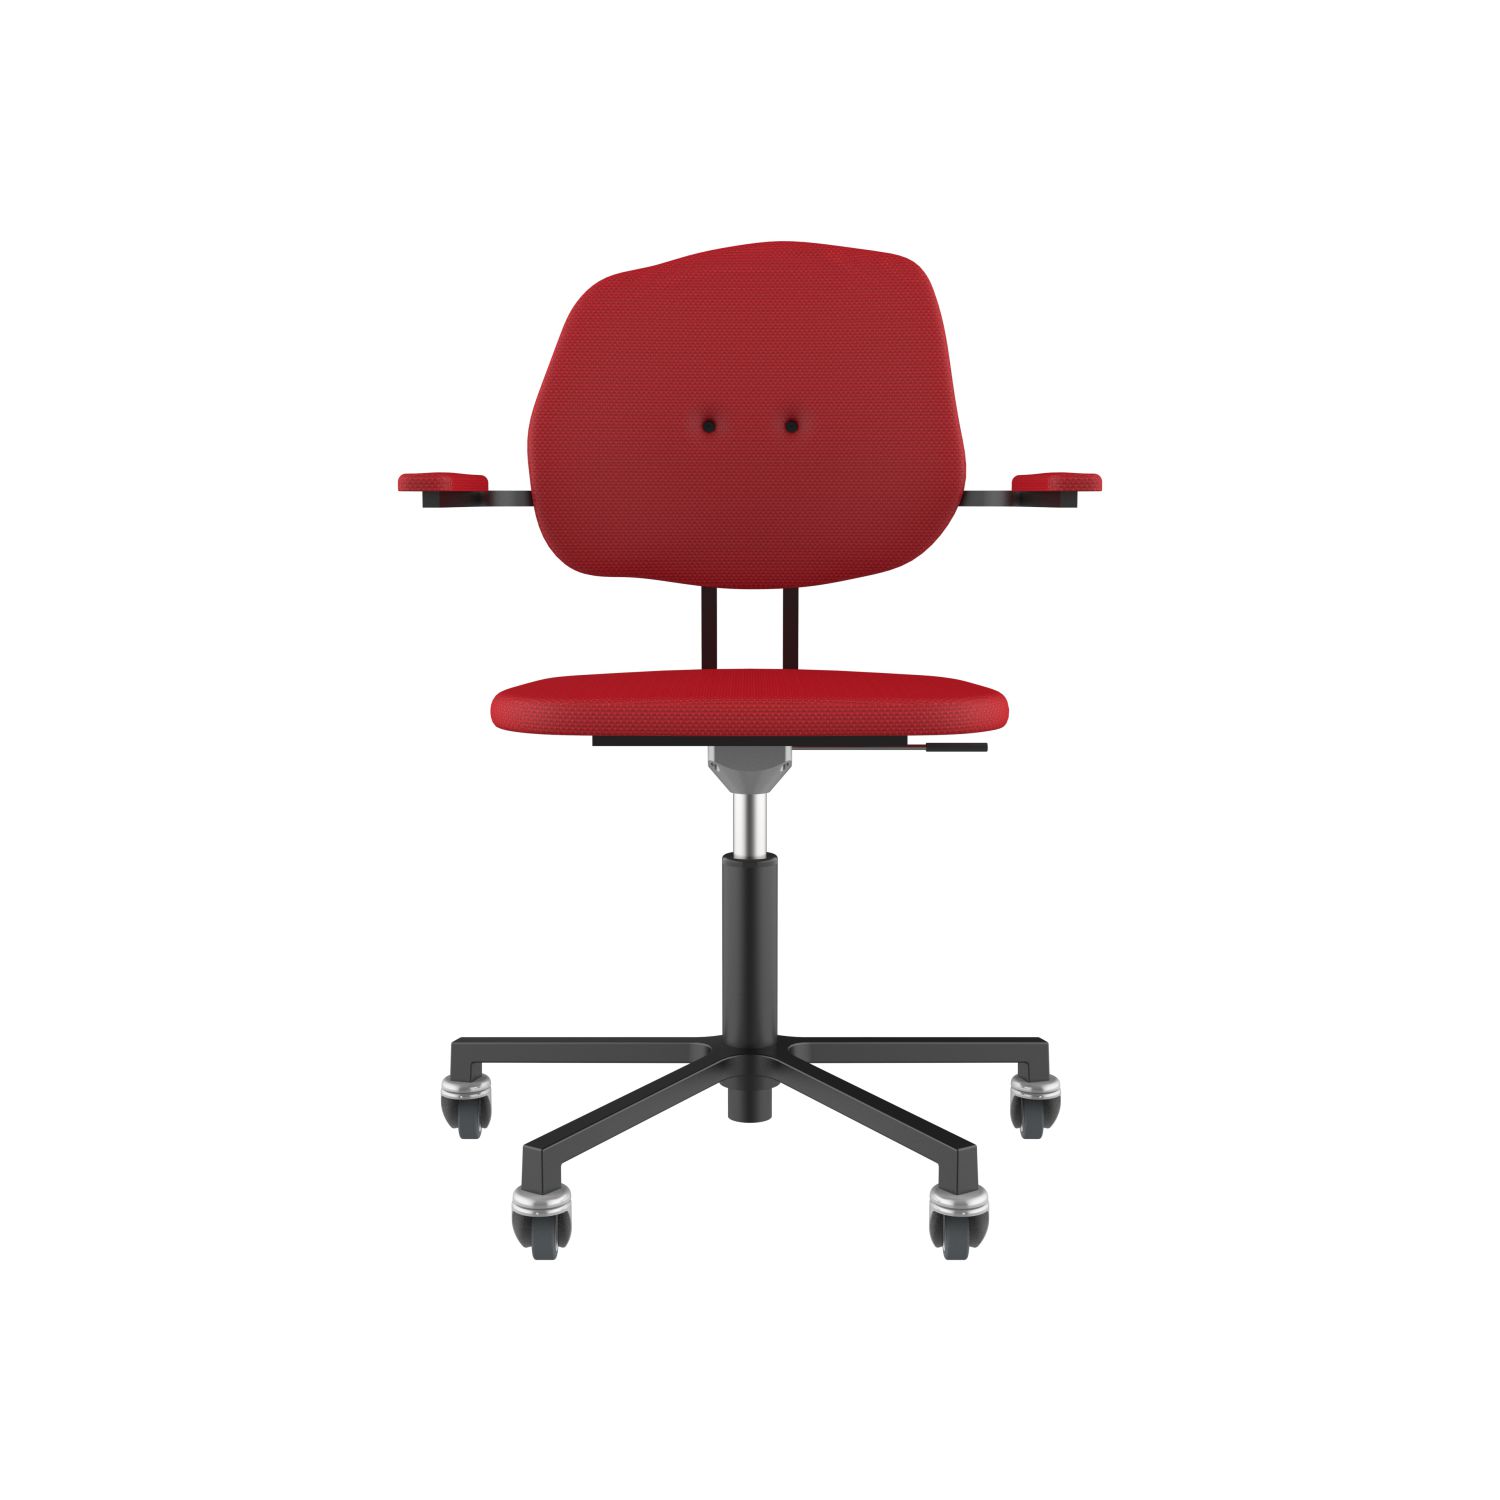 lensvelt maarten baas office chair with armrests backrest g grenada red 010 black ral9005 soft wheels